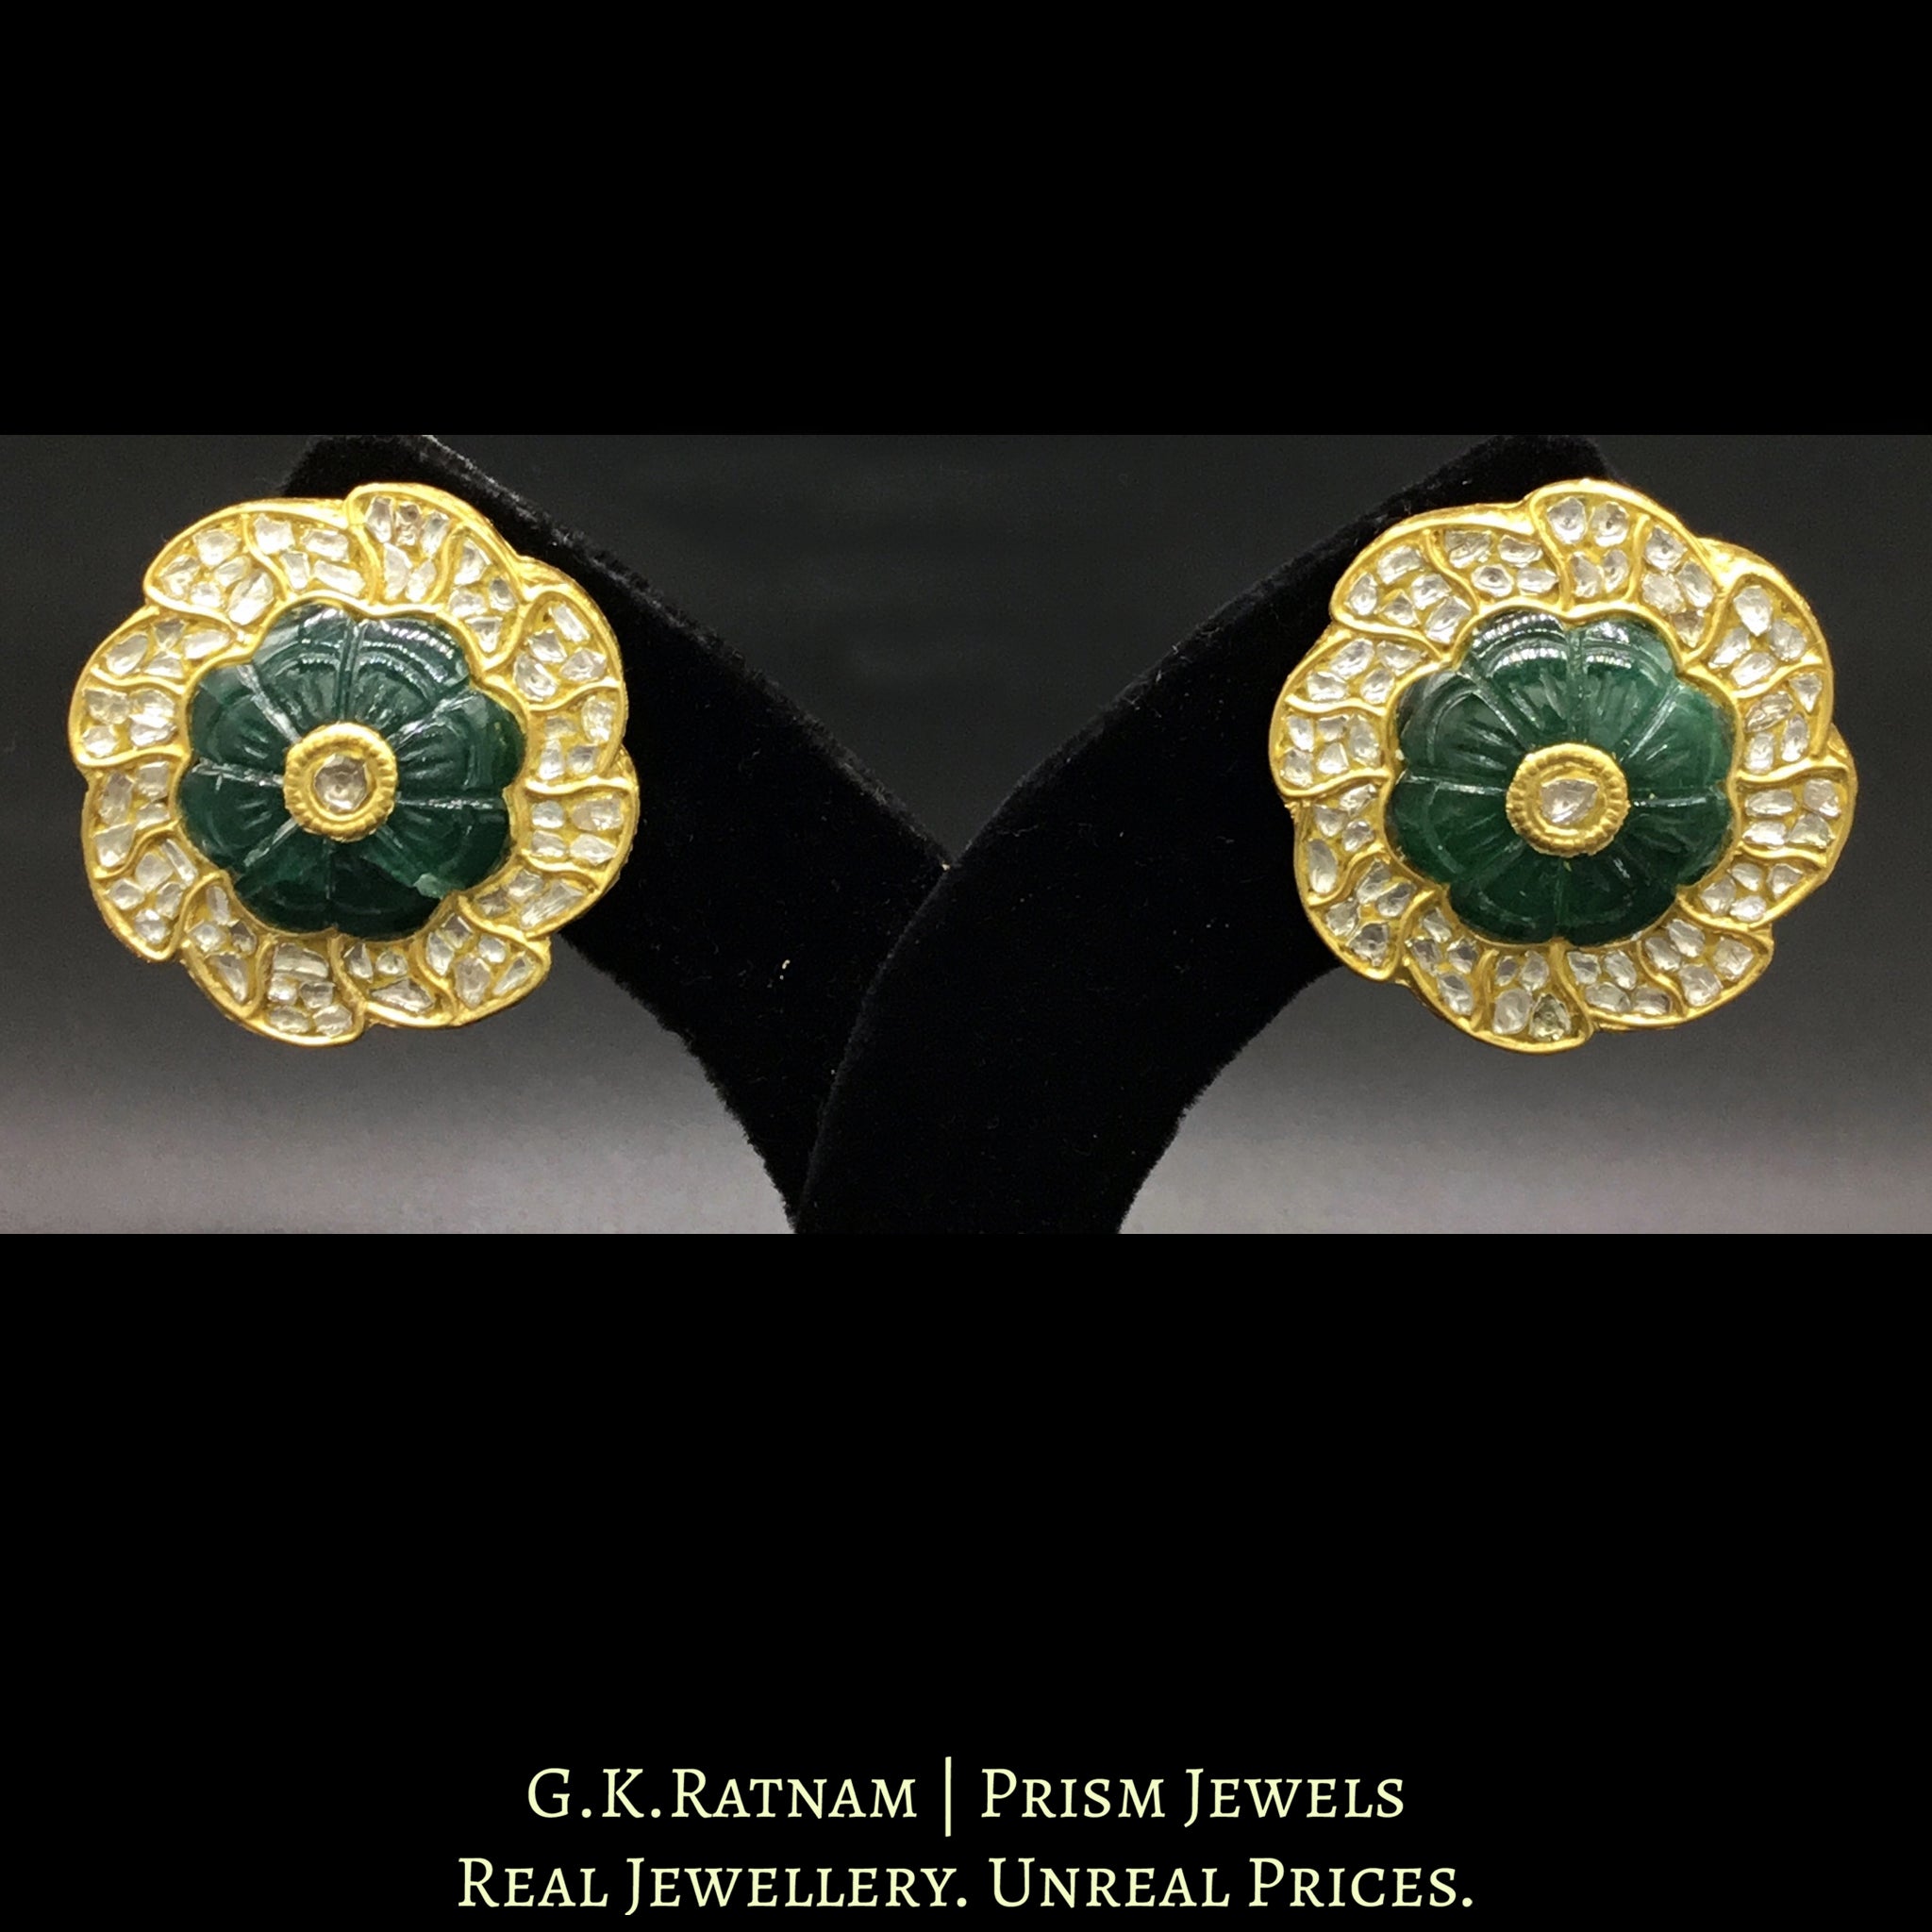 23k Gold and Diamond Polki Karanphool Earring Pair with carved Green Beryls